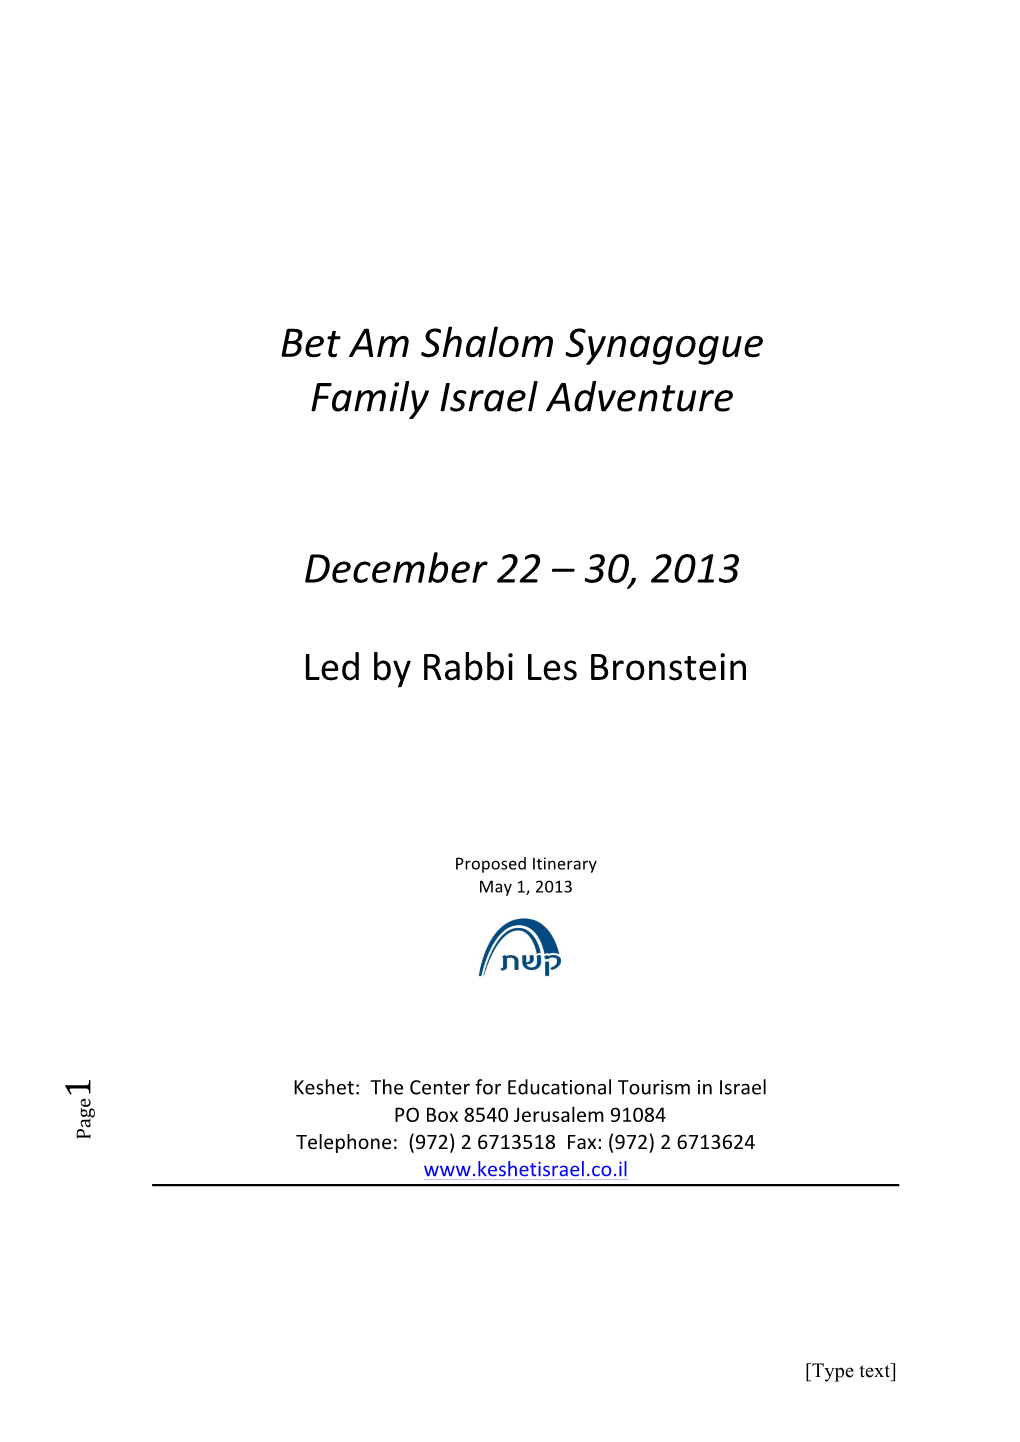 Bet Am Shalom Synagogue Family Israel Adventure December 22